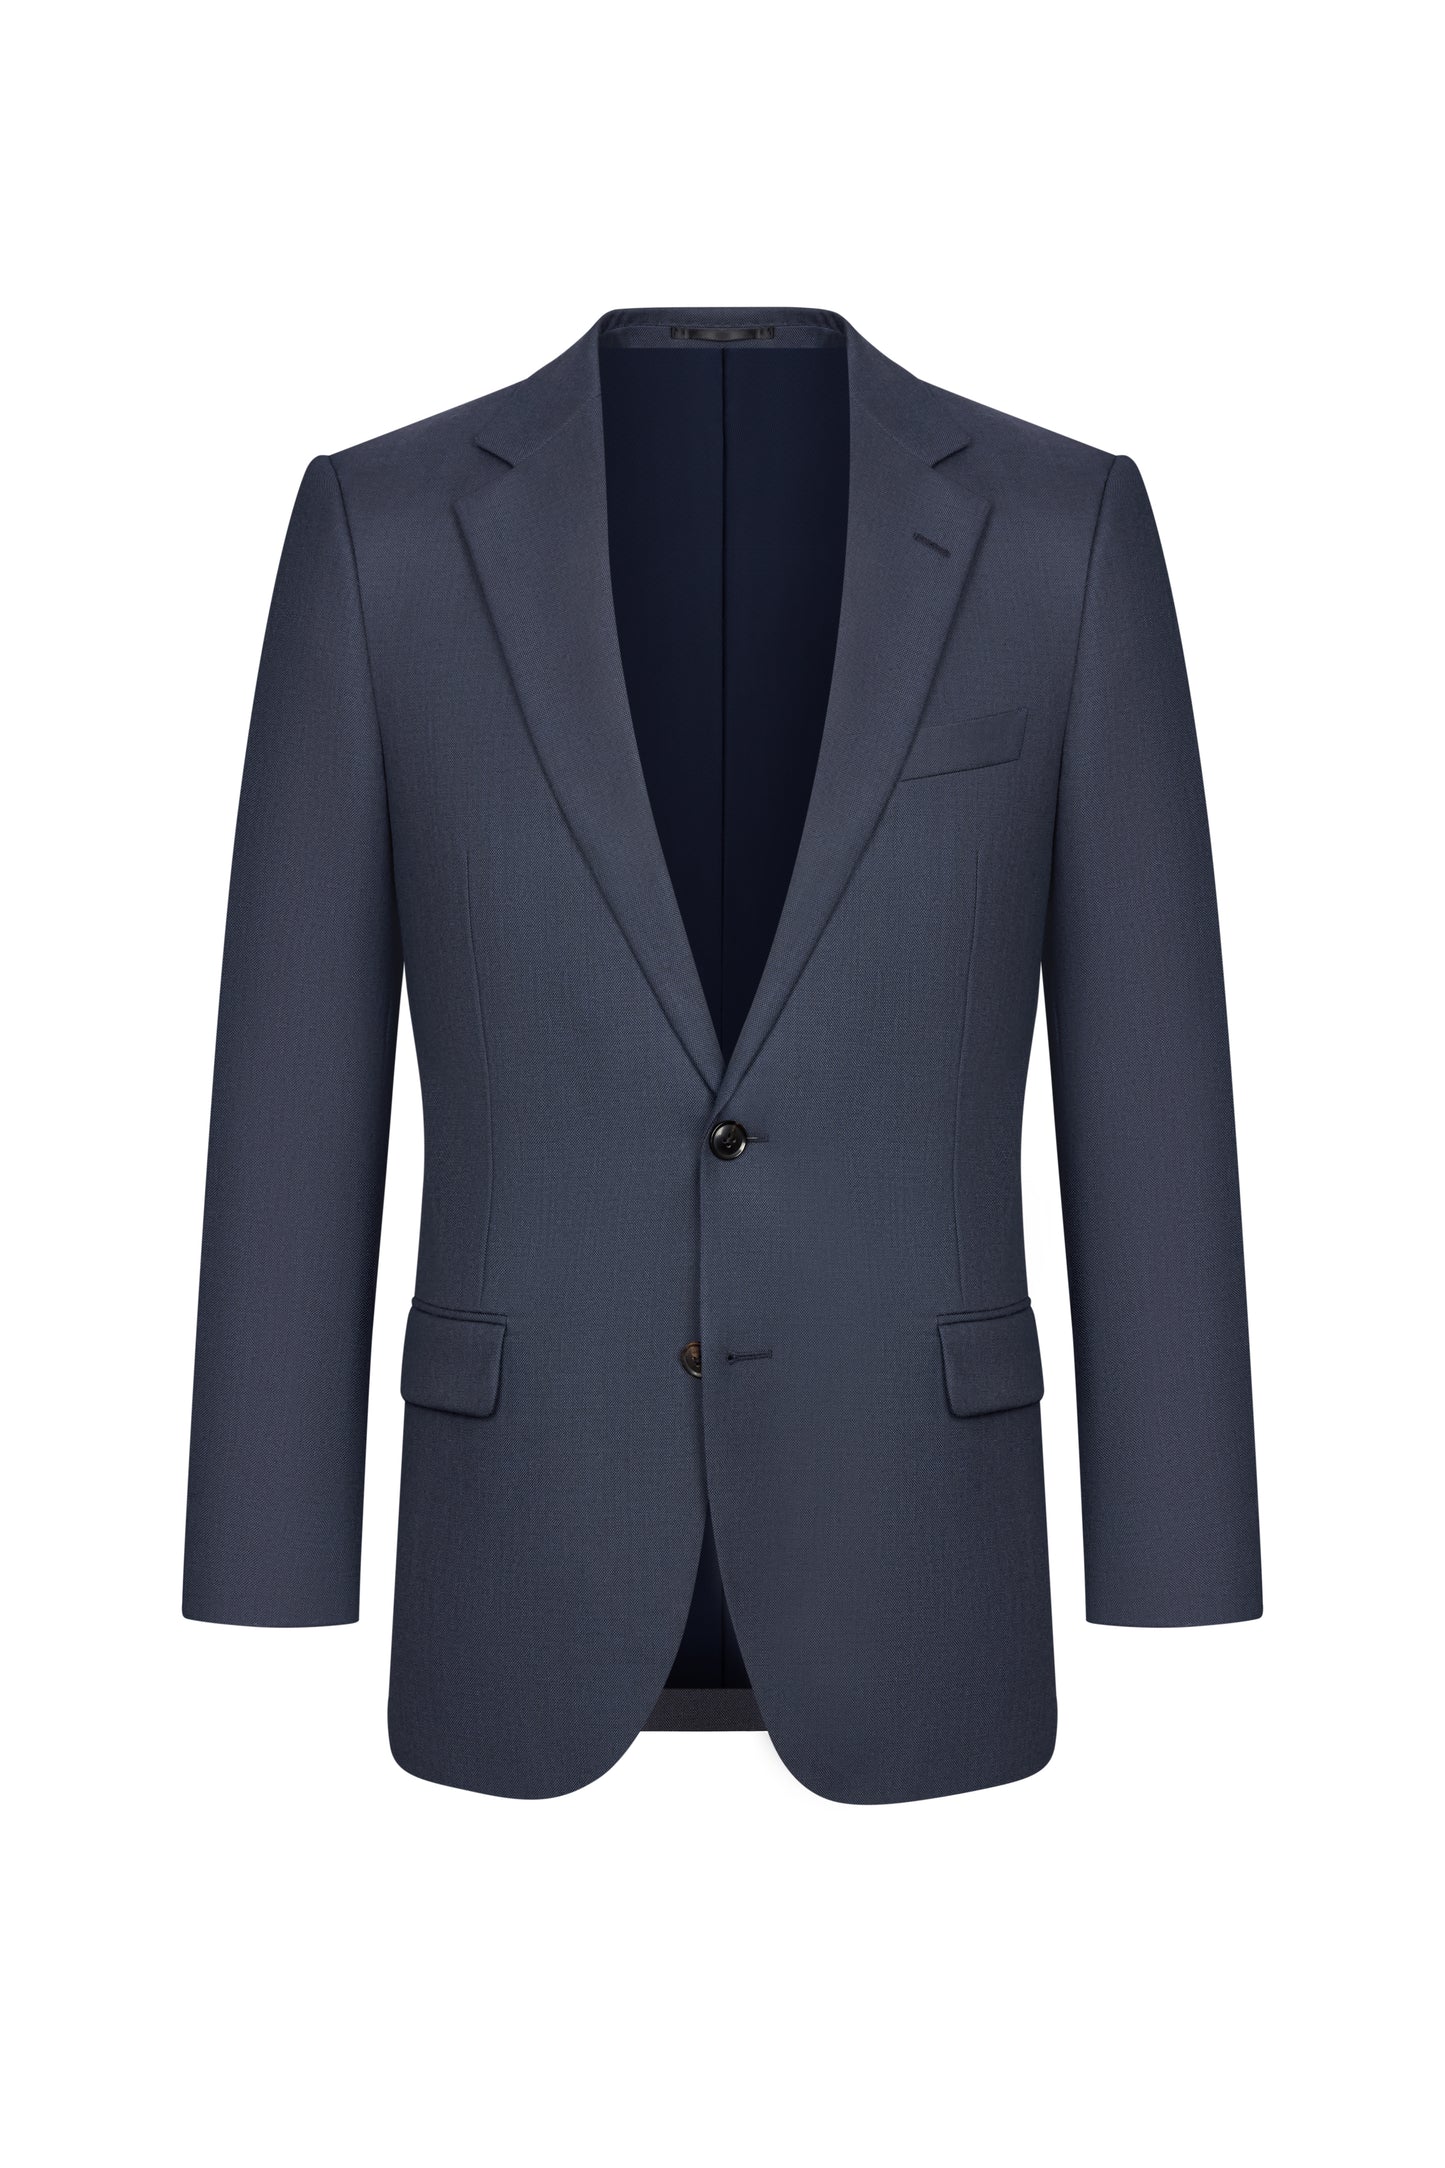 Holland & Sherry Navy Blue Sharkskin Custom Suit